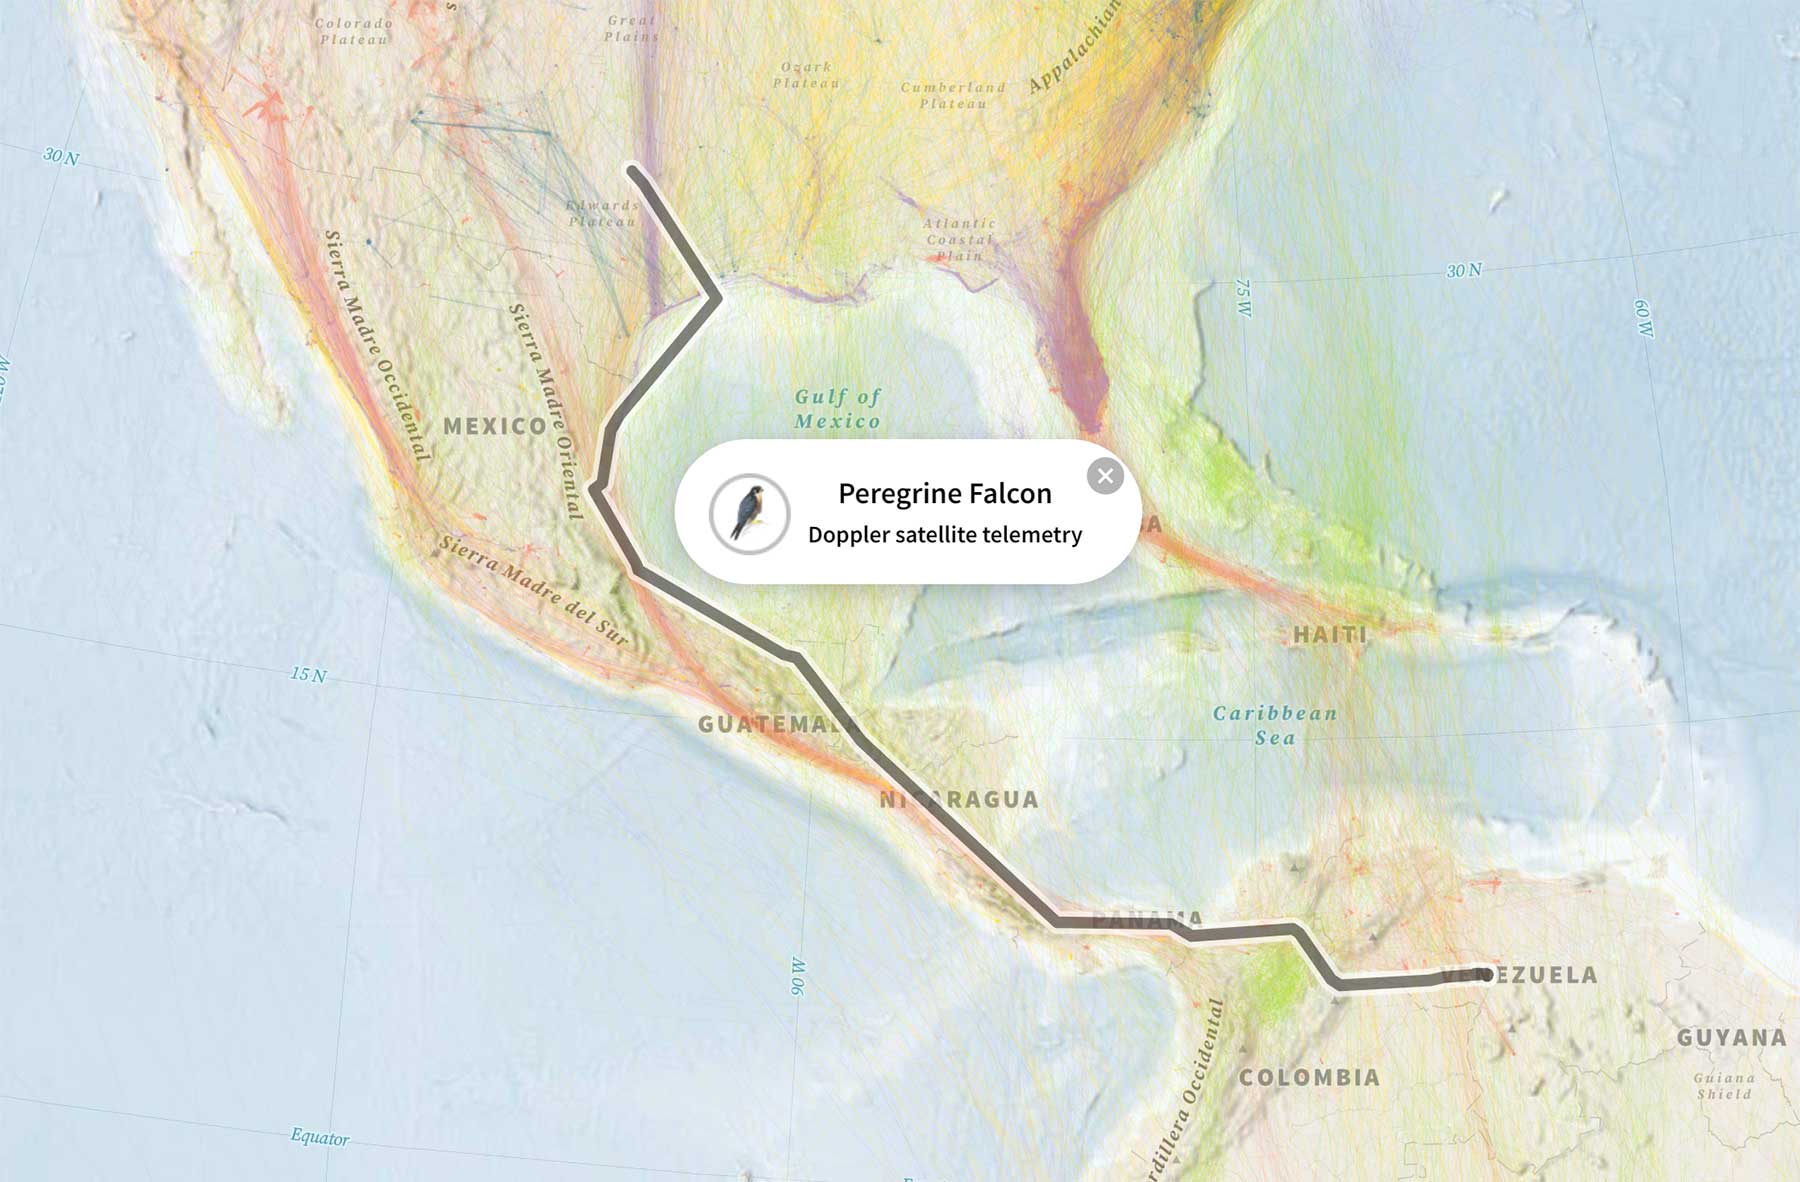 Interaktive Karte zeigt Zugvögel-Migration Bird-Migration-explorer-2 